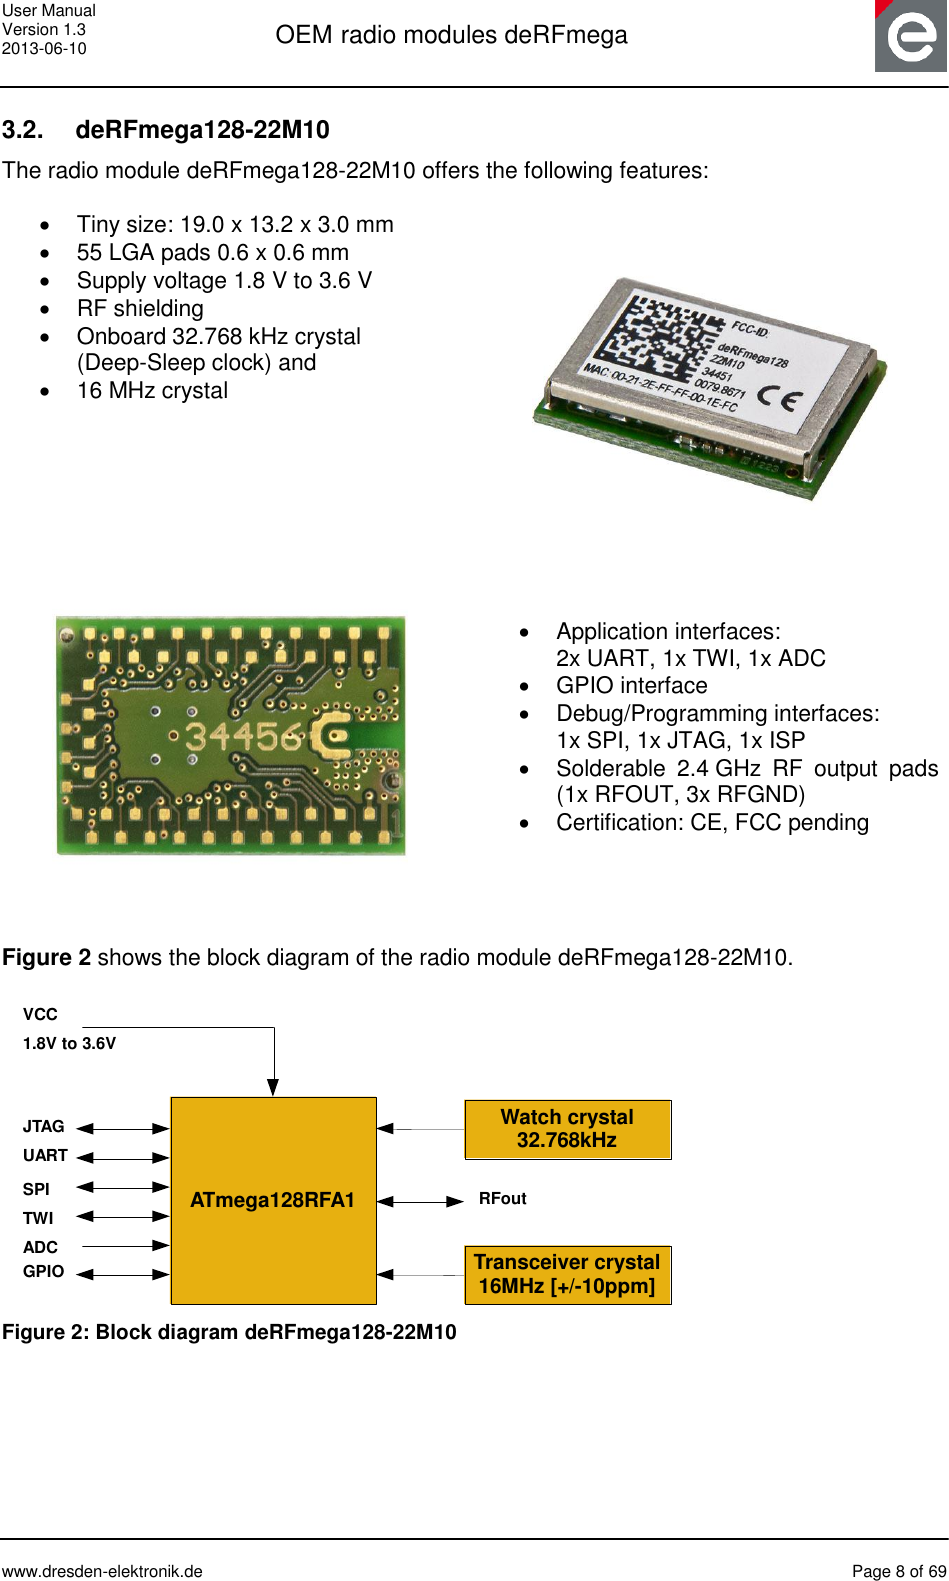 User Manual Version 1.3 2013-06-10  OEM radio modules deRFmega      www.dresden-elektronik.de  Page 8 of 69  3.2.  deRFmega128-22M10 The radio module deRFmega128-22M10 offers the following features:    Tiny size: 19.0 x 13.2 x 3.0 mm  55 LGA pads 0.6 x 0.6 mm   Supply voltage 1.8 V to 3.6 V   RF shielding   Onboard 32.768 kHz crystal  (Deep-Sleep clock) and   16 MHz crystal       Application interfaces:  2x UART, 1x TWI, 1x ADC   GPIO interface   Debug/Programming interfaces:  1x SPI, 1x JTAG, 1x ISP   Solderable  2.4 GHz  RF  output  pads (1x RFOUT, 3x RFGND)  Certification: CE, FCC pending   Figure 2 shows the block diagram of the radio module deRFmega128-22M10.   ATmega128RFA1Transceiver crystal16MHz [+/-10ppm]JTAGUARTVCC1.8V to 3.6VWatch crystal32.768kHzSPITWIADCGPIORFout Figure 2: Block diagram deRFmega128-22M10 